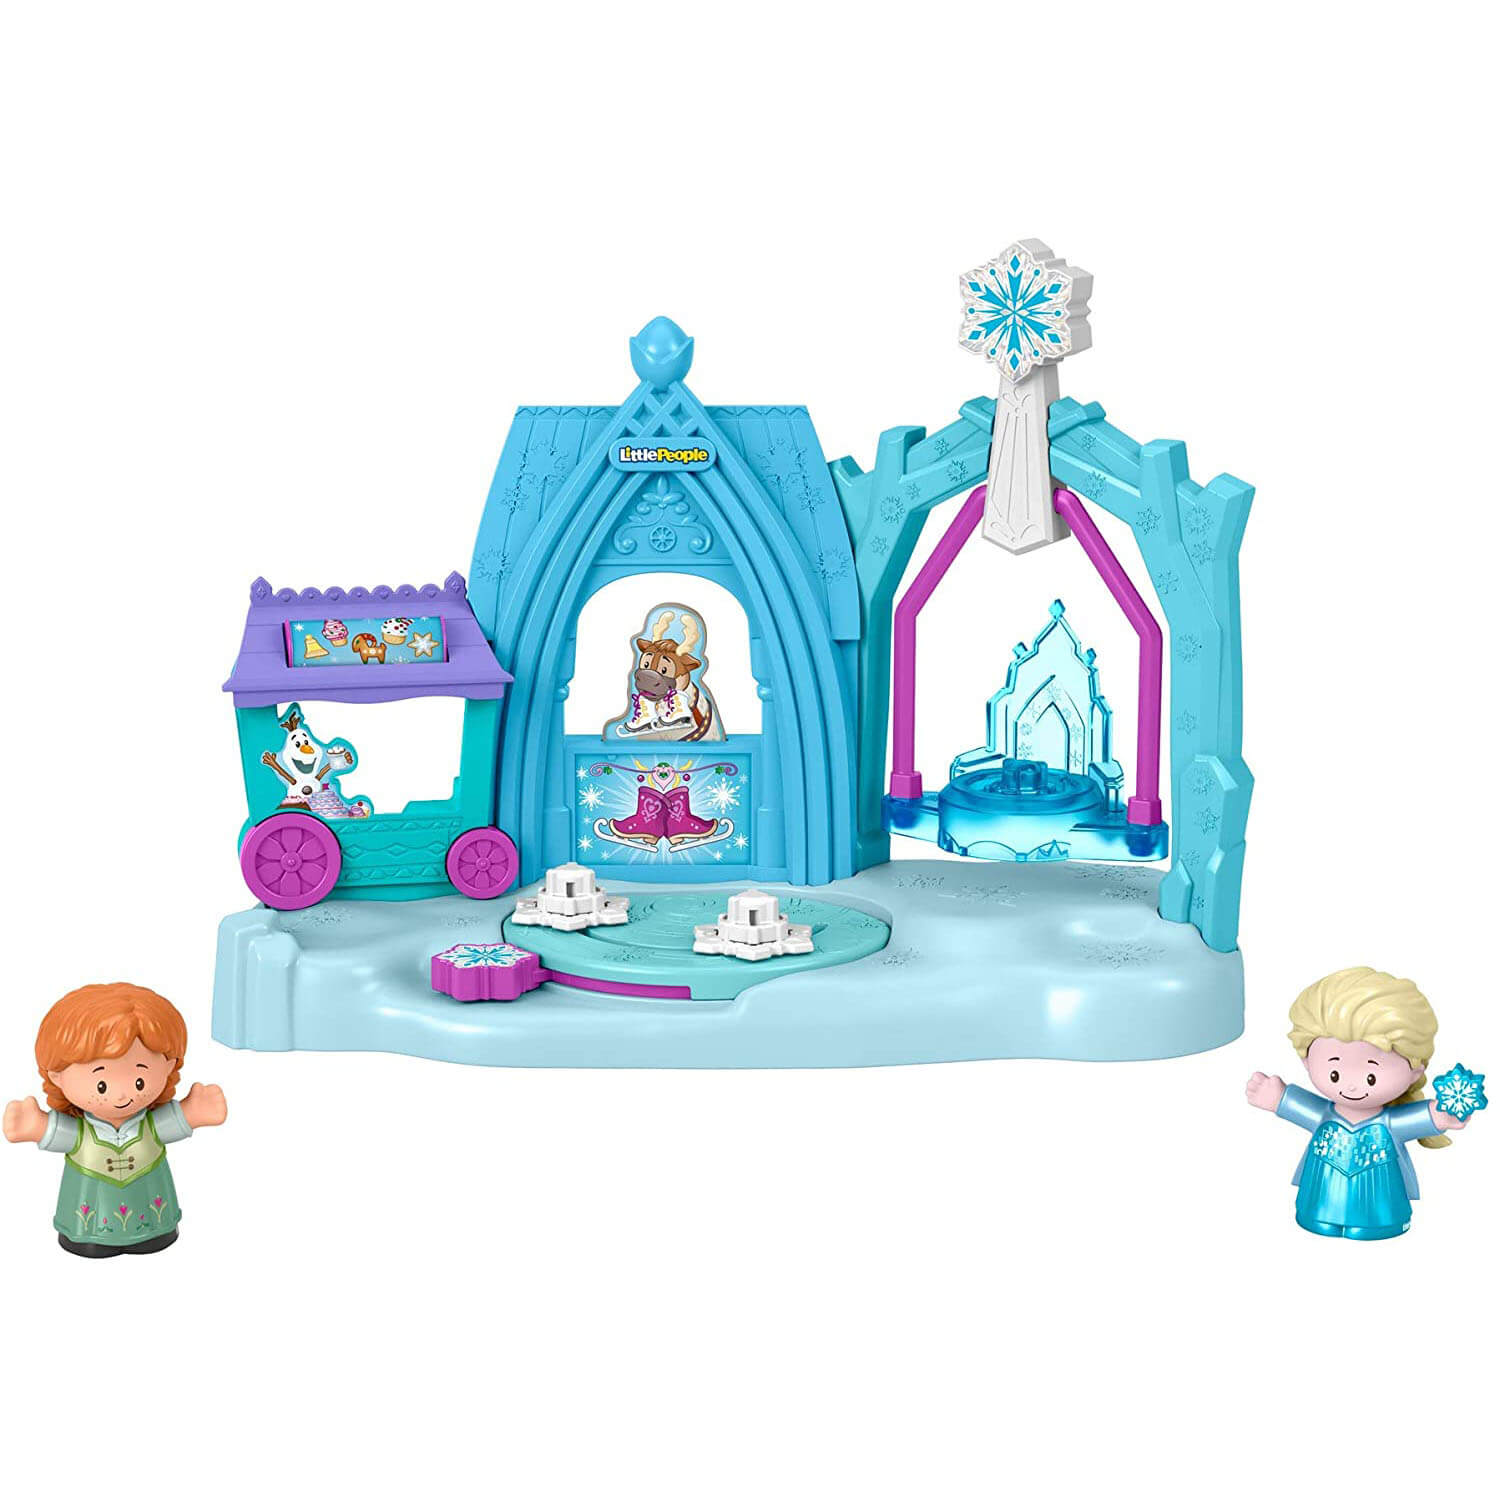 Little People Disney Frozen Arendelle Winter Wonderland